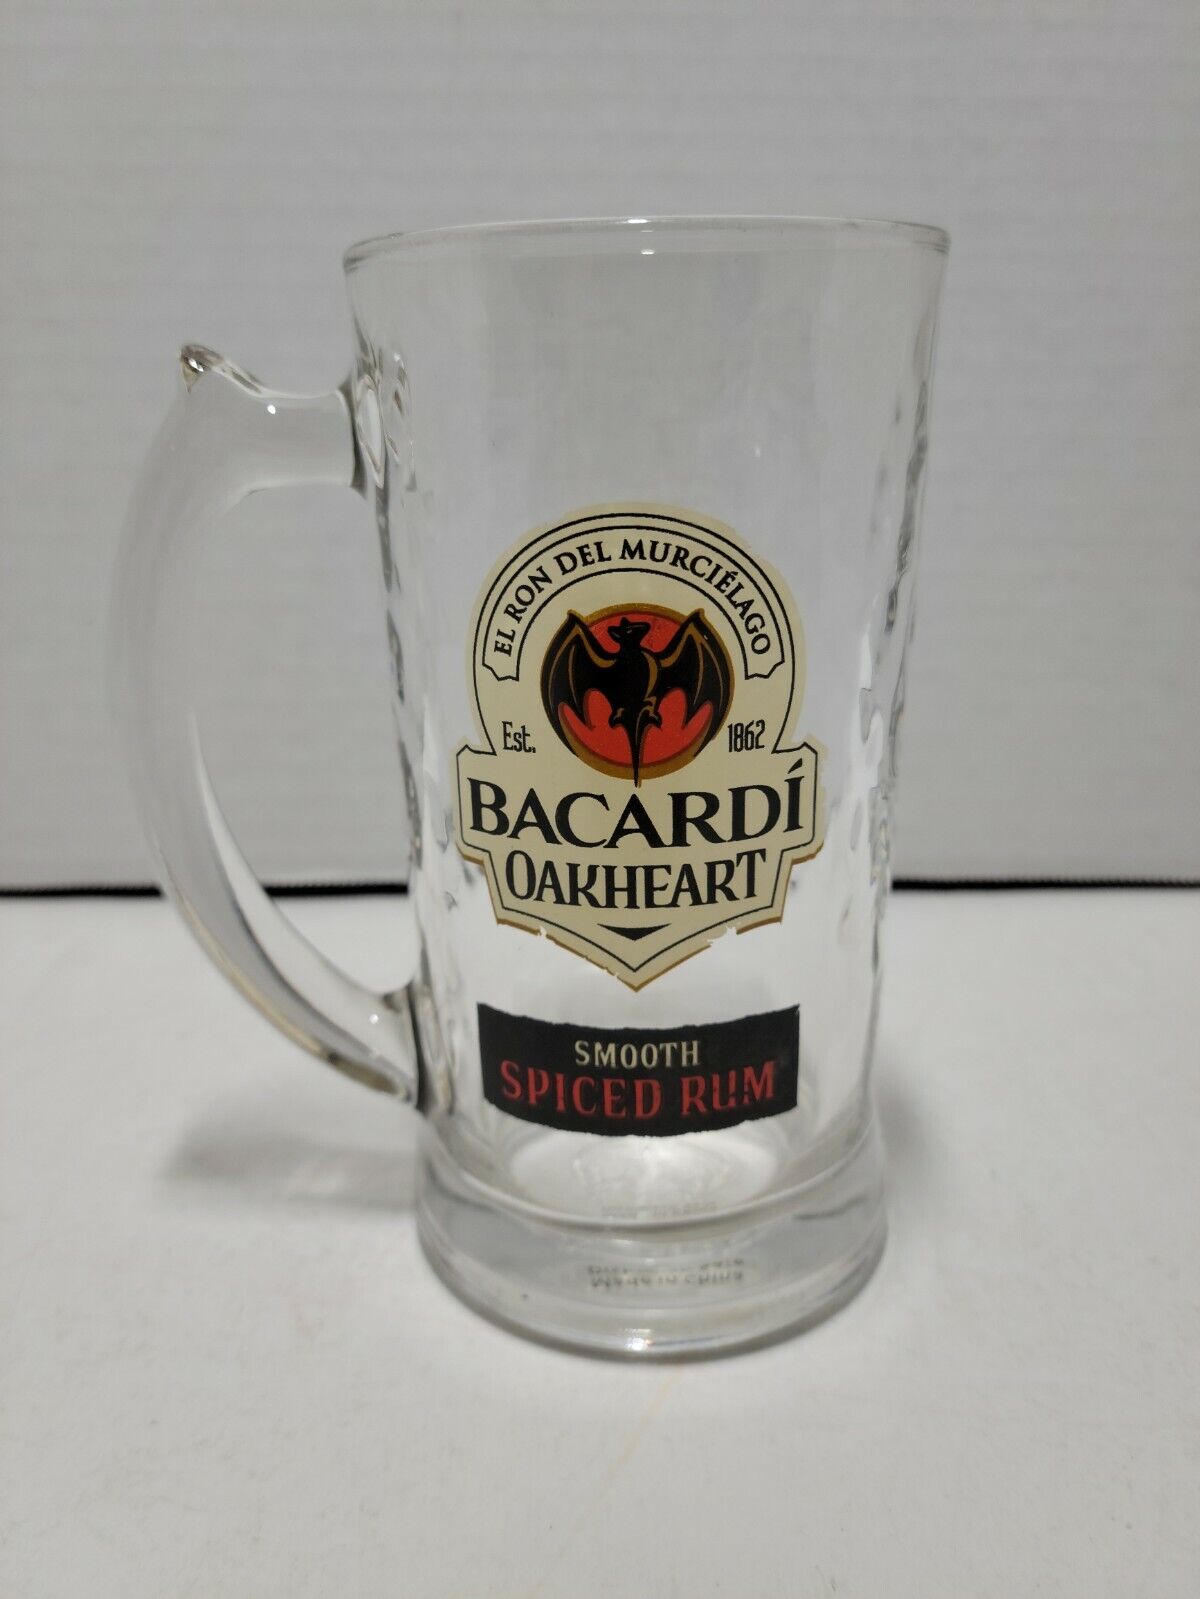 Bacardi Oakheart Smooth Spiced Rum Glass Mug Beer Stein 6"